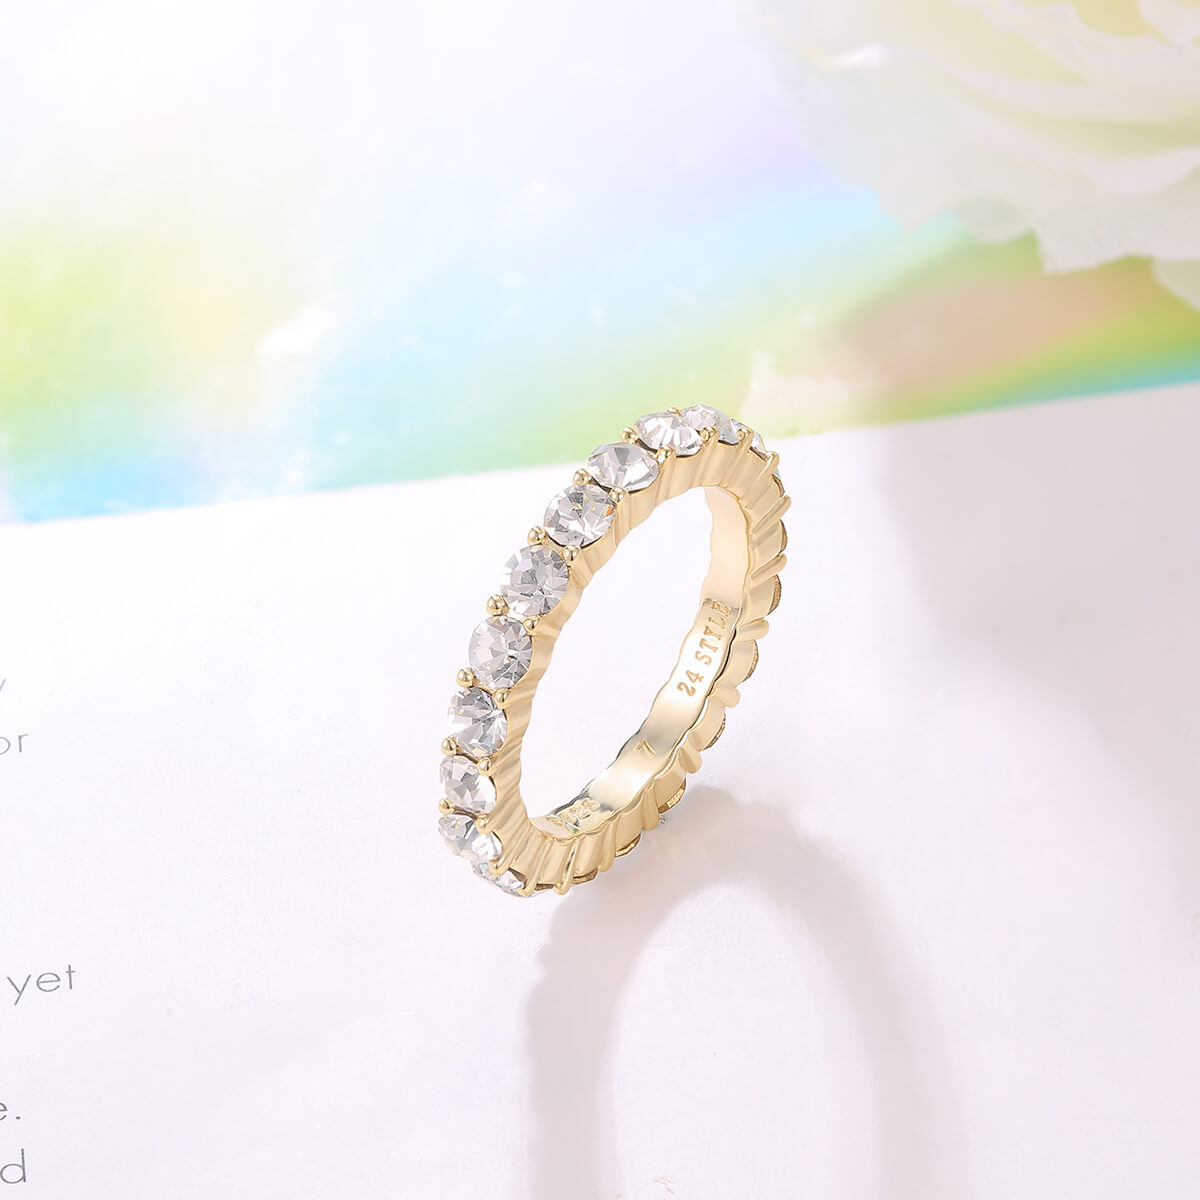 Gold Crystal Ring